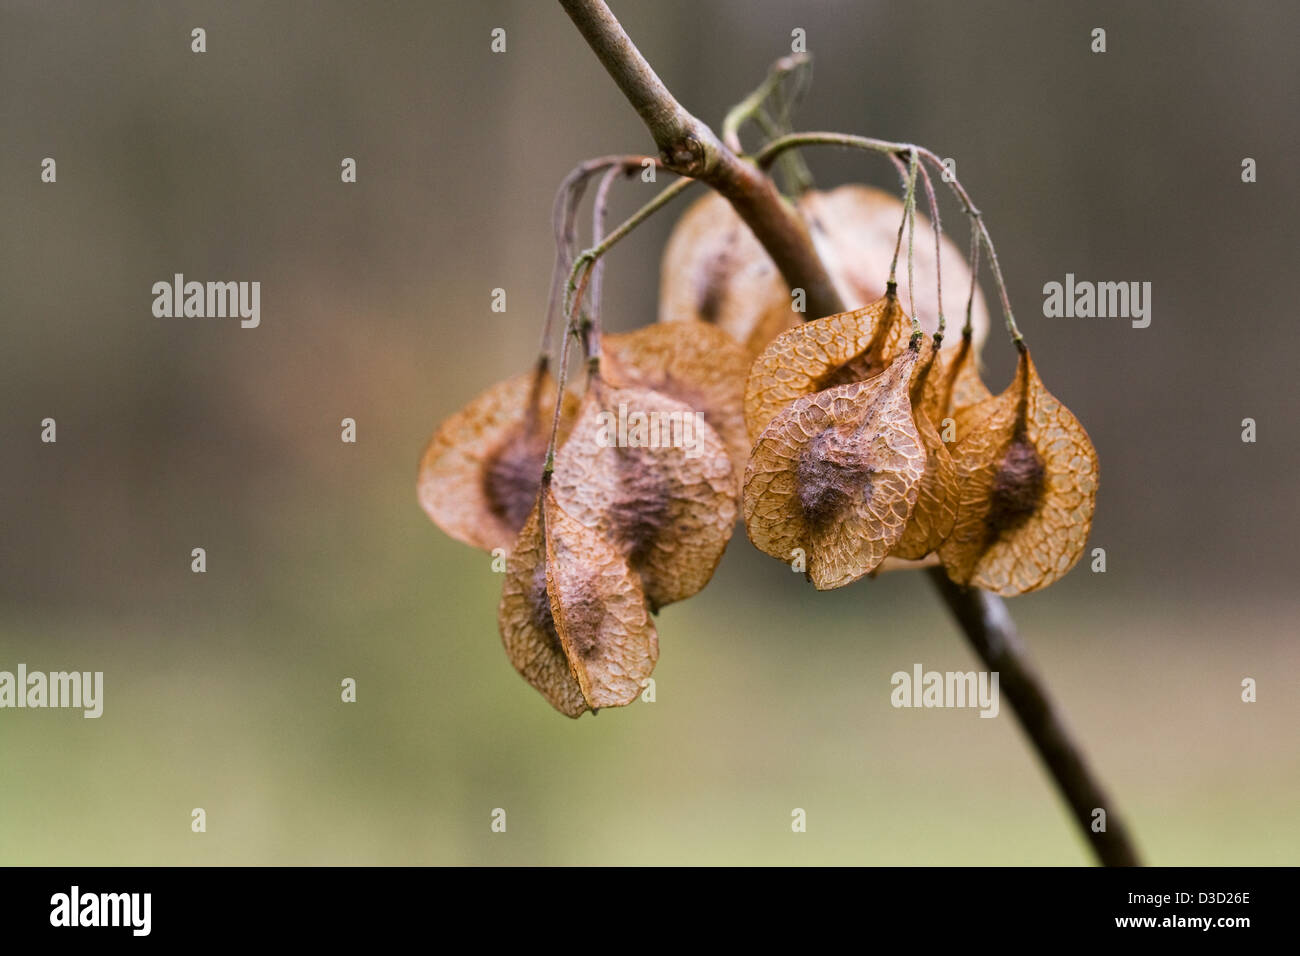 Seedpods of Ptelea Trifoliata. Stock Photo